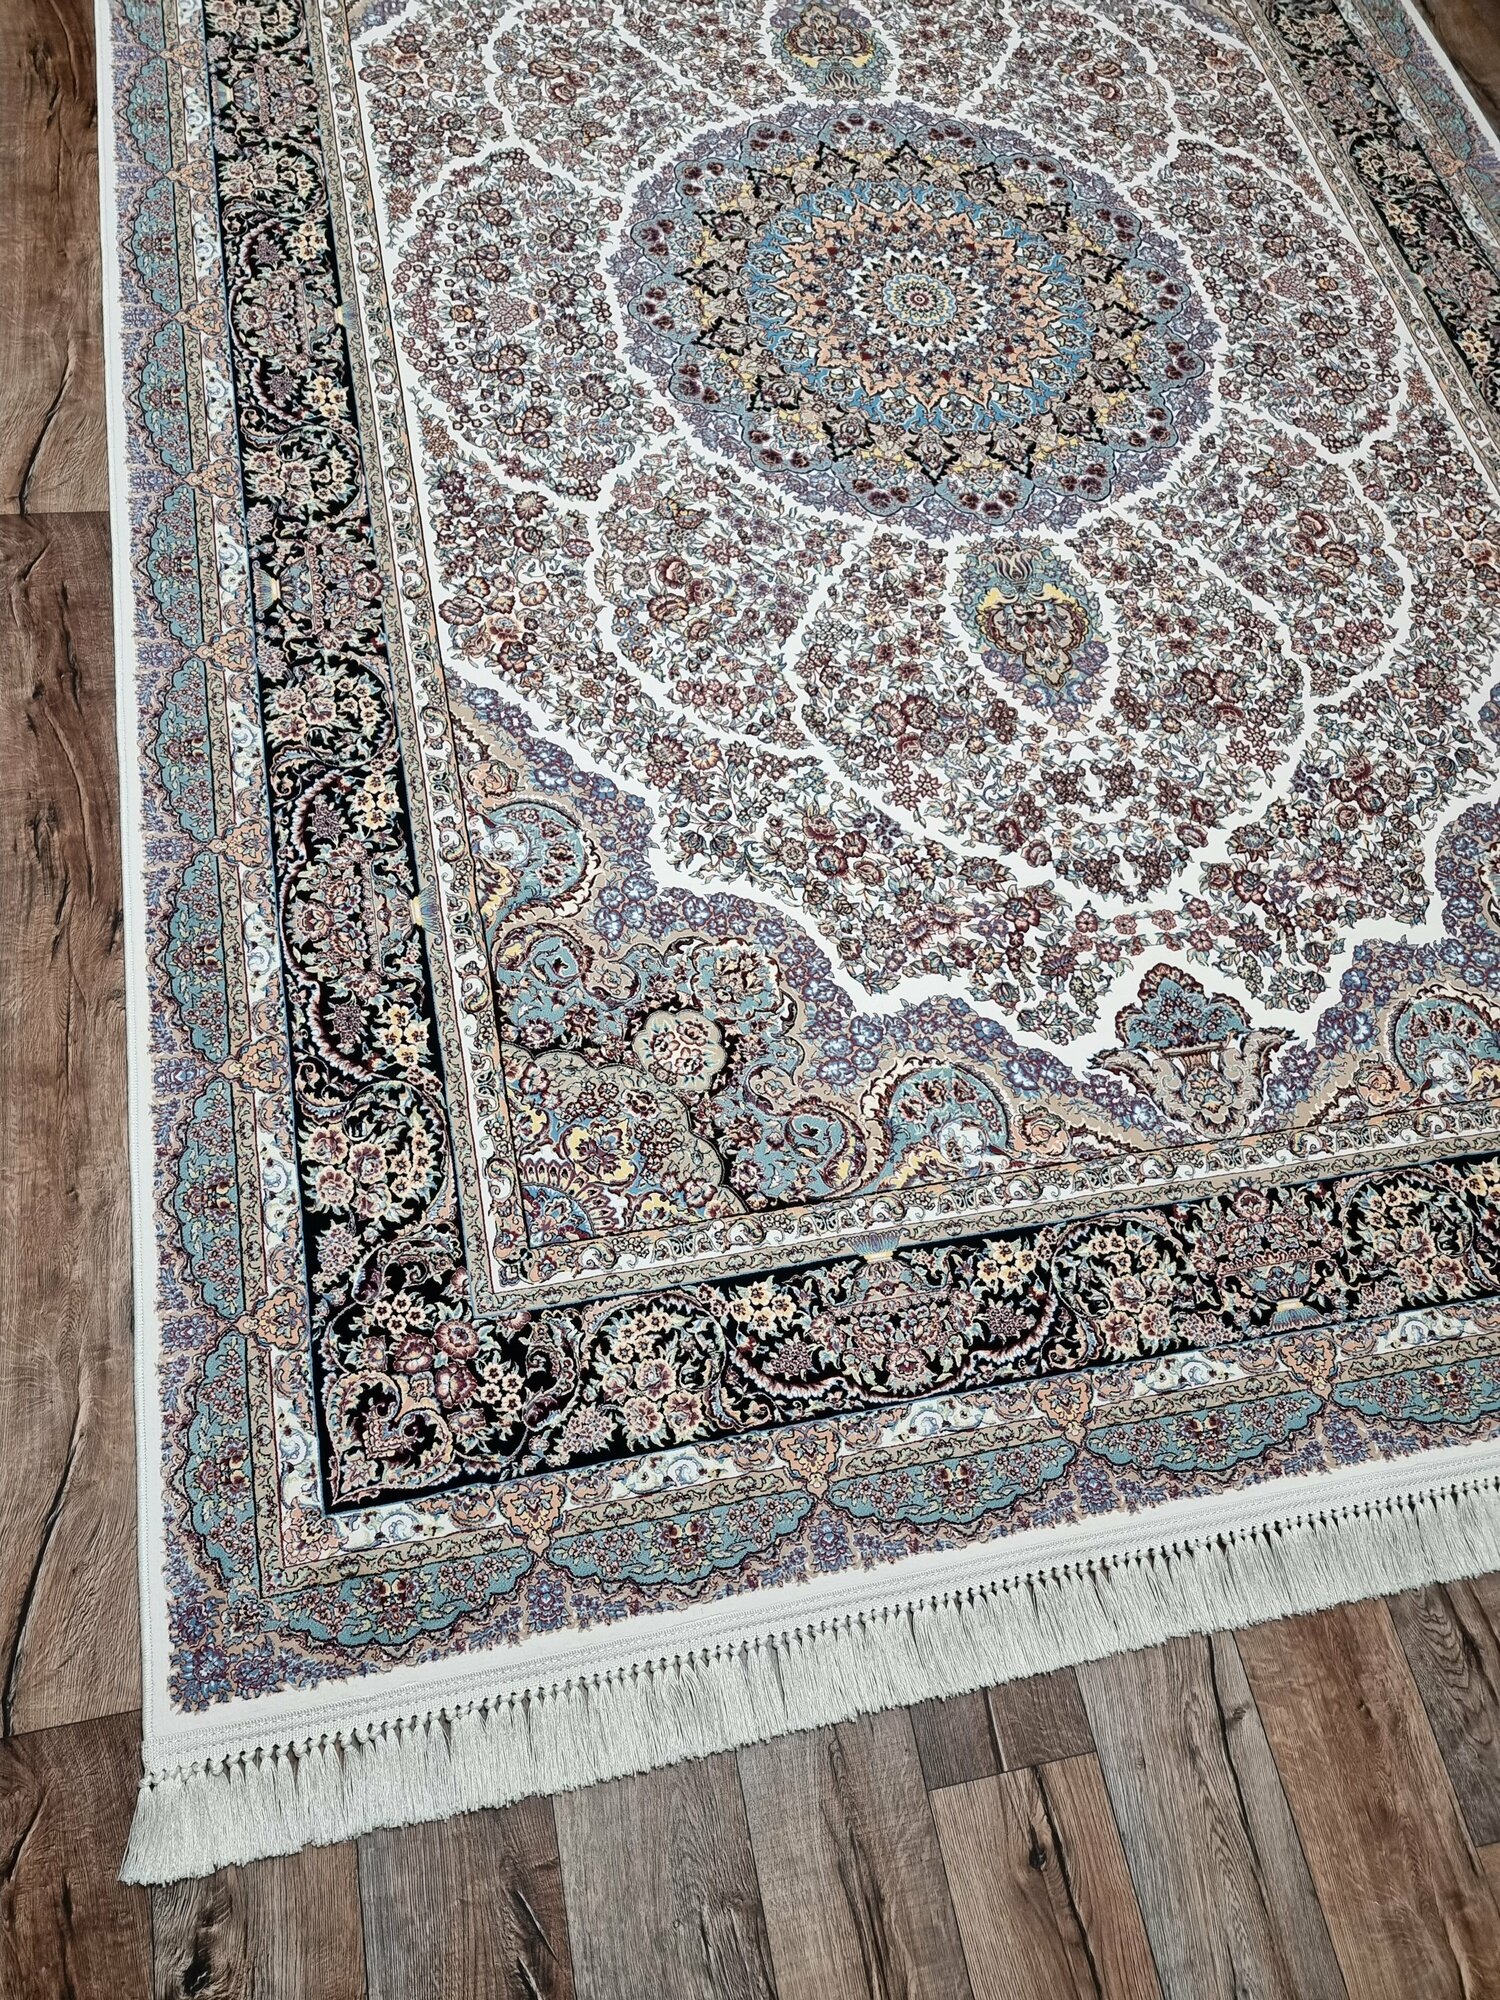 Персидский ковер Farrahi Carpet, Иран, размер 1.5х2.25 м